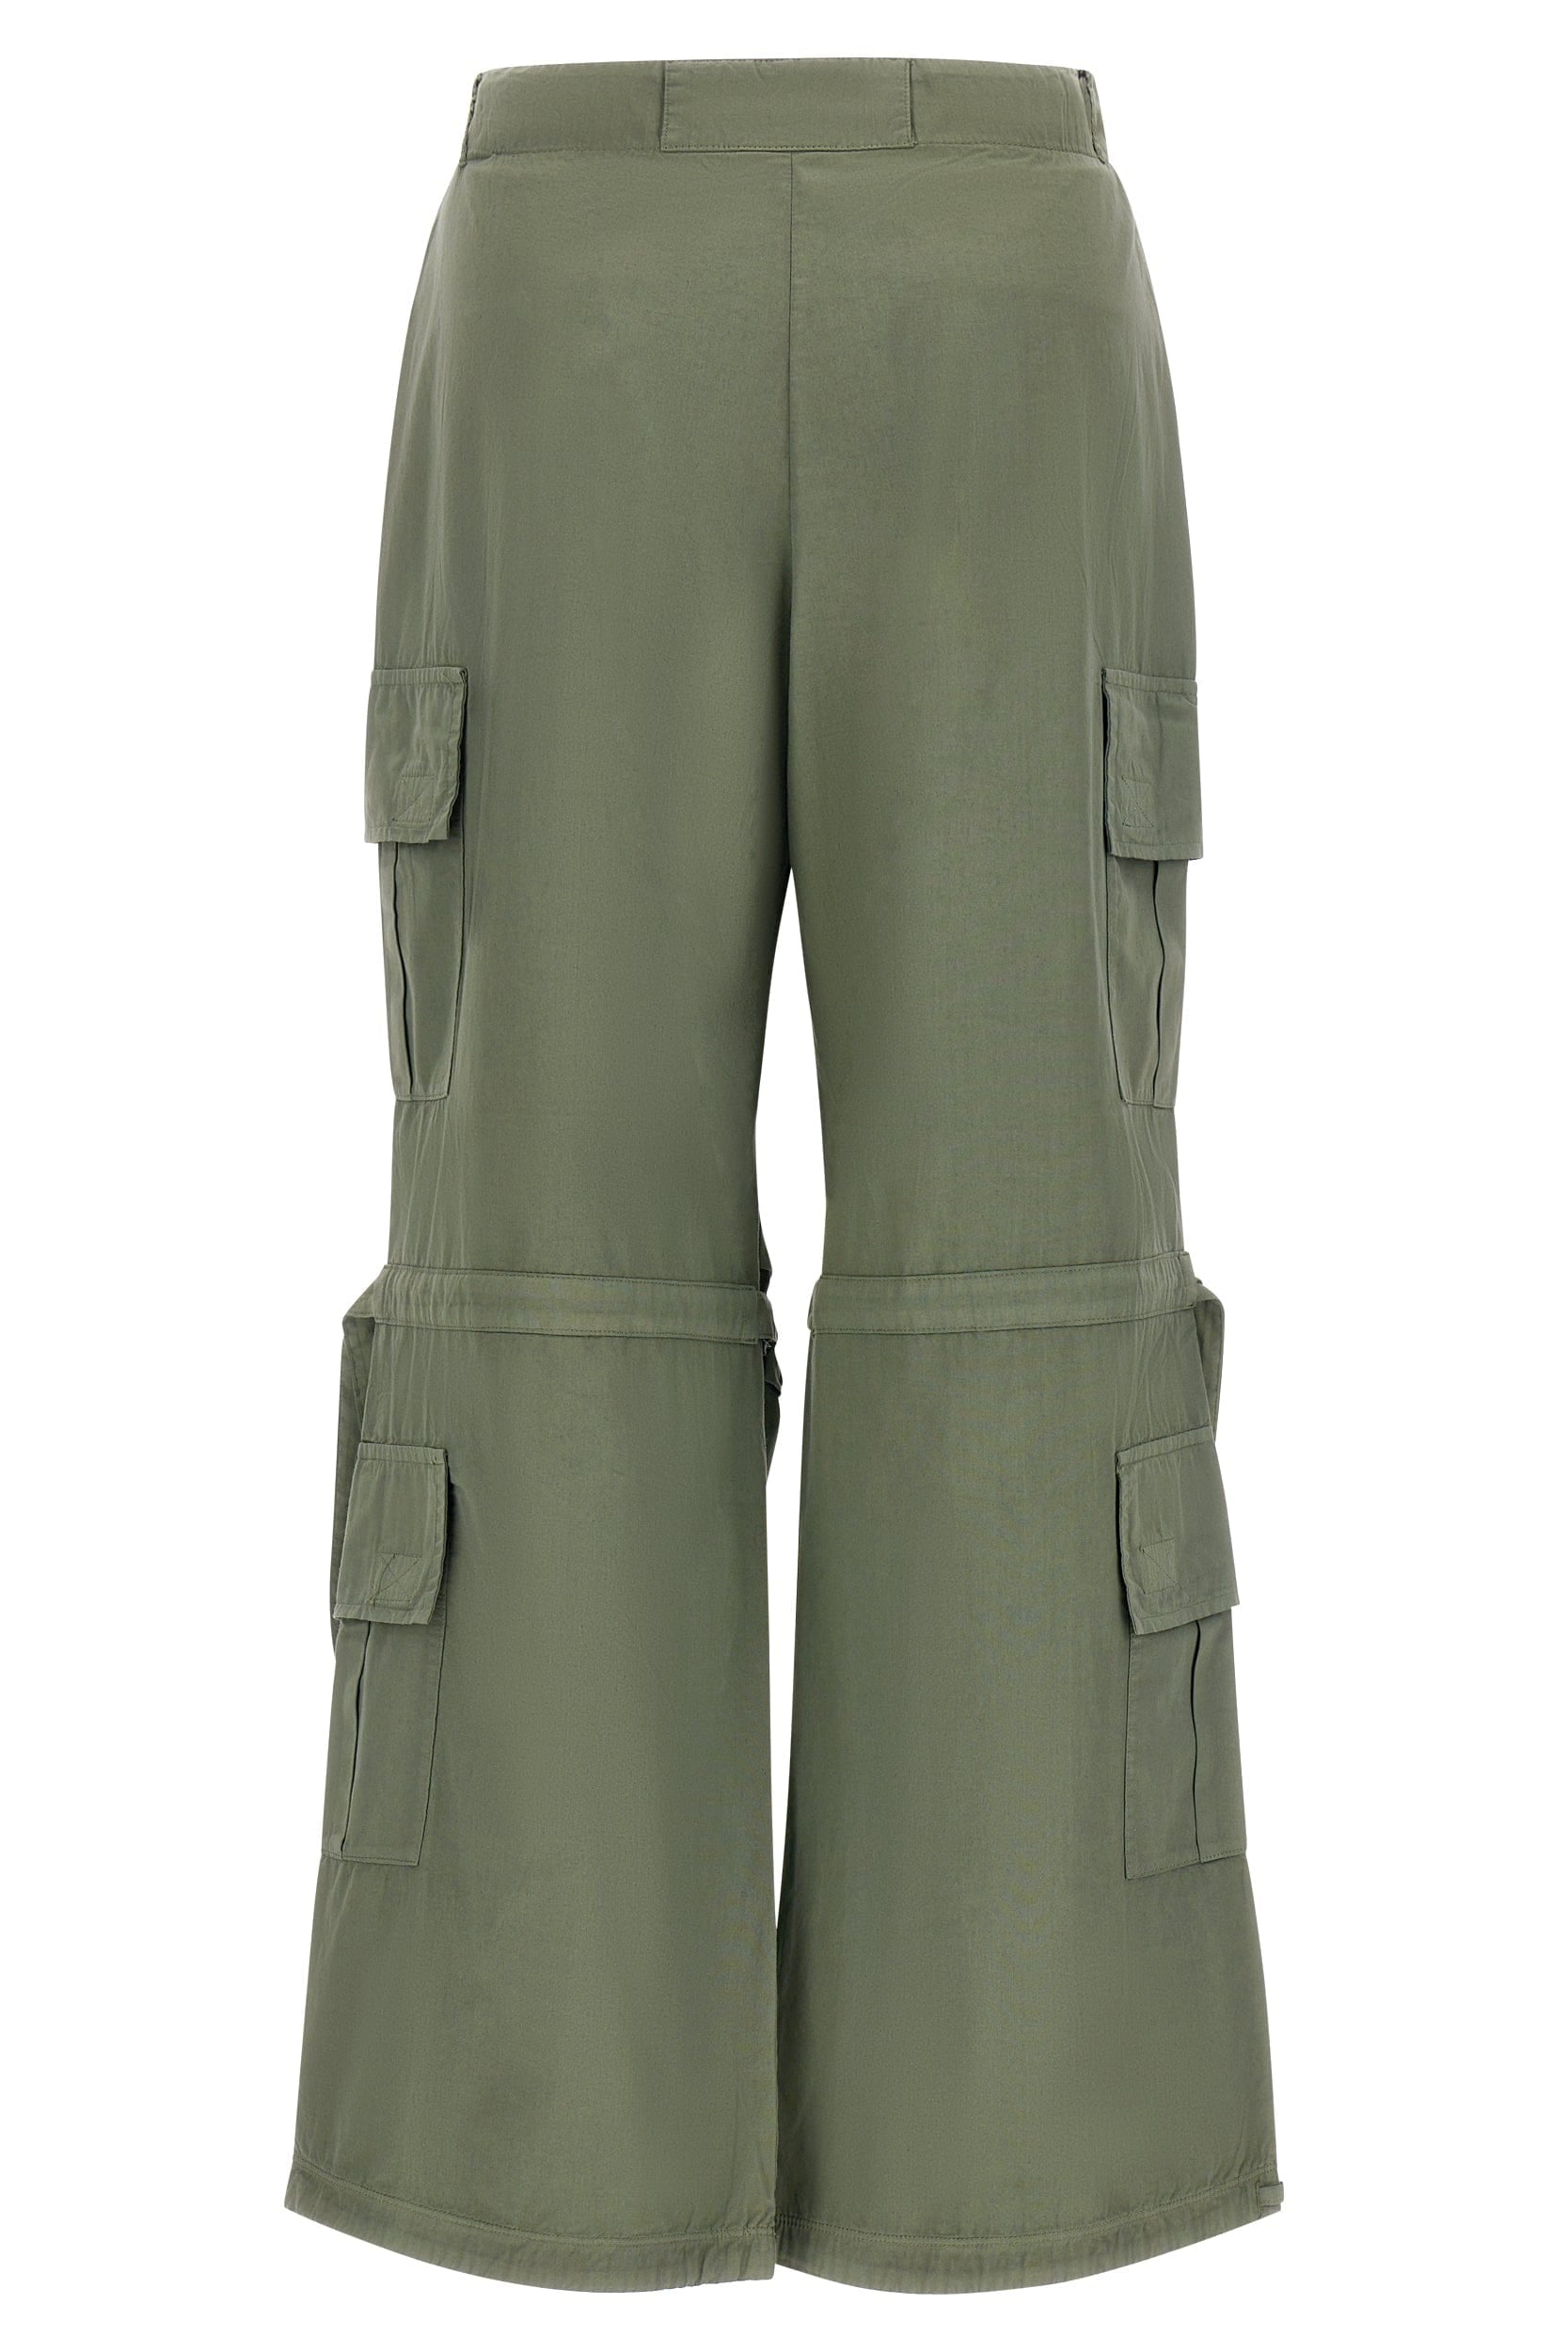 Cargo Pants - High Waisted - Full Length - Military Green 8